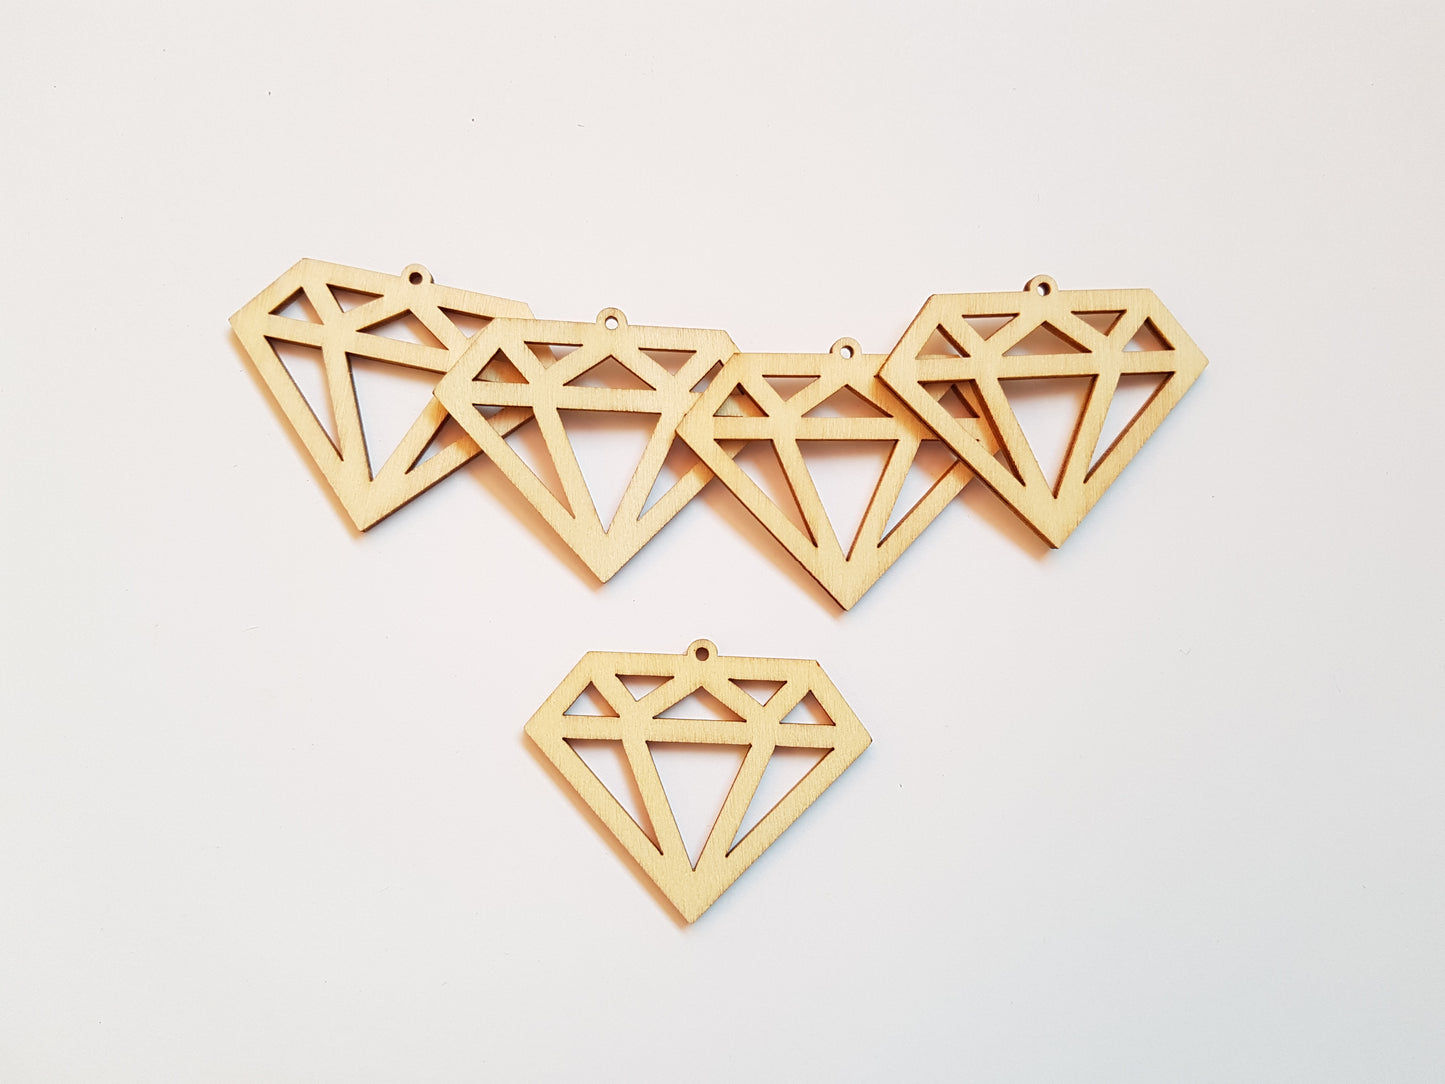 55mm wooden diamond gem shapes